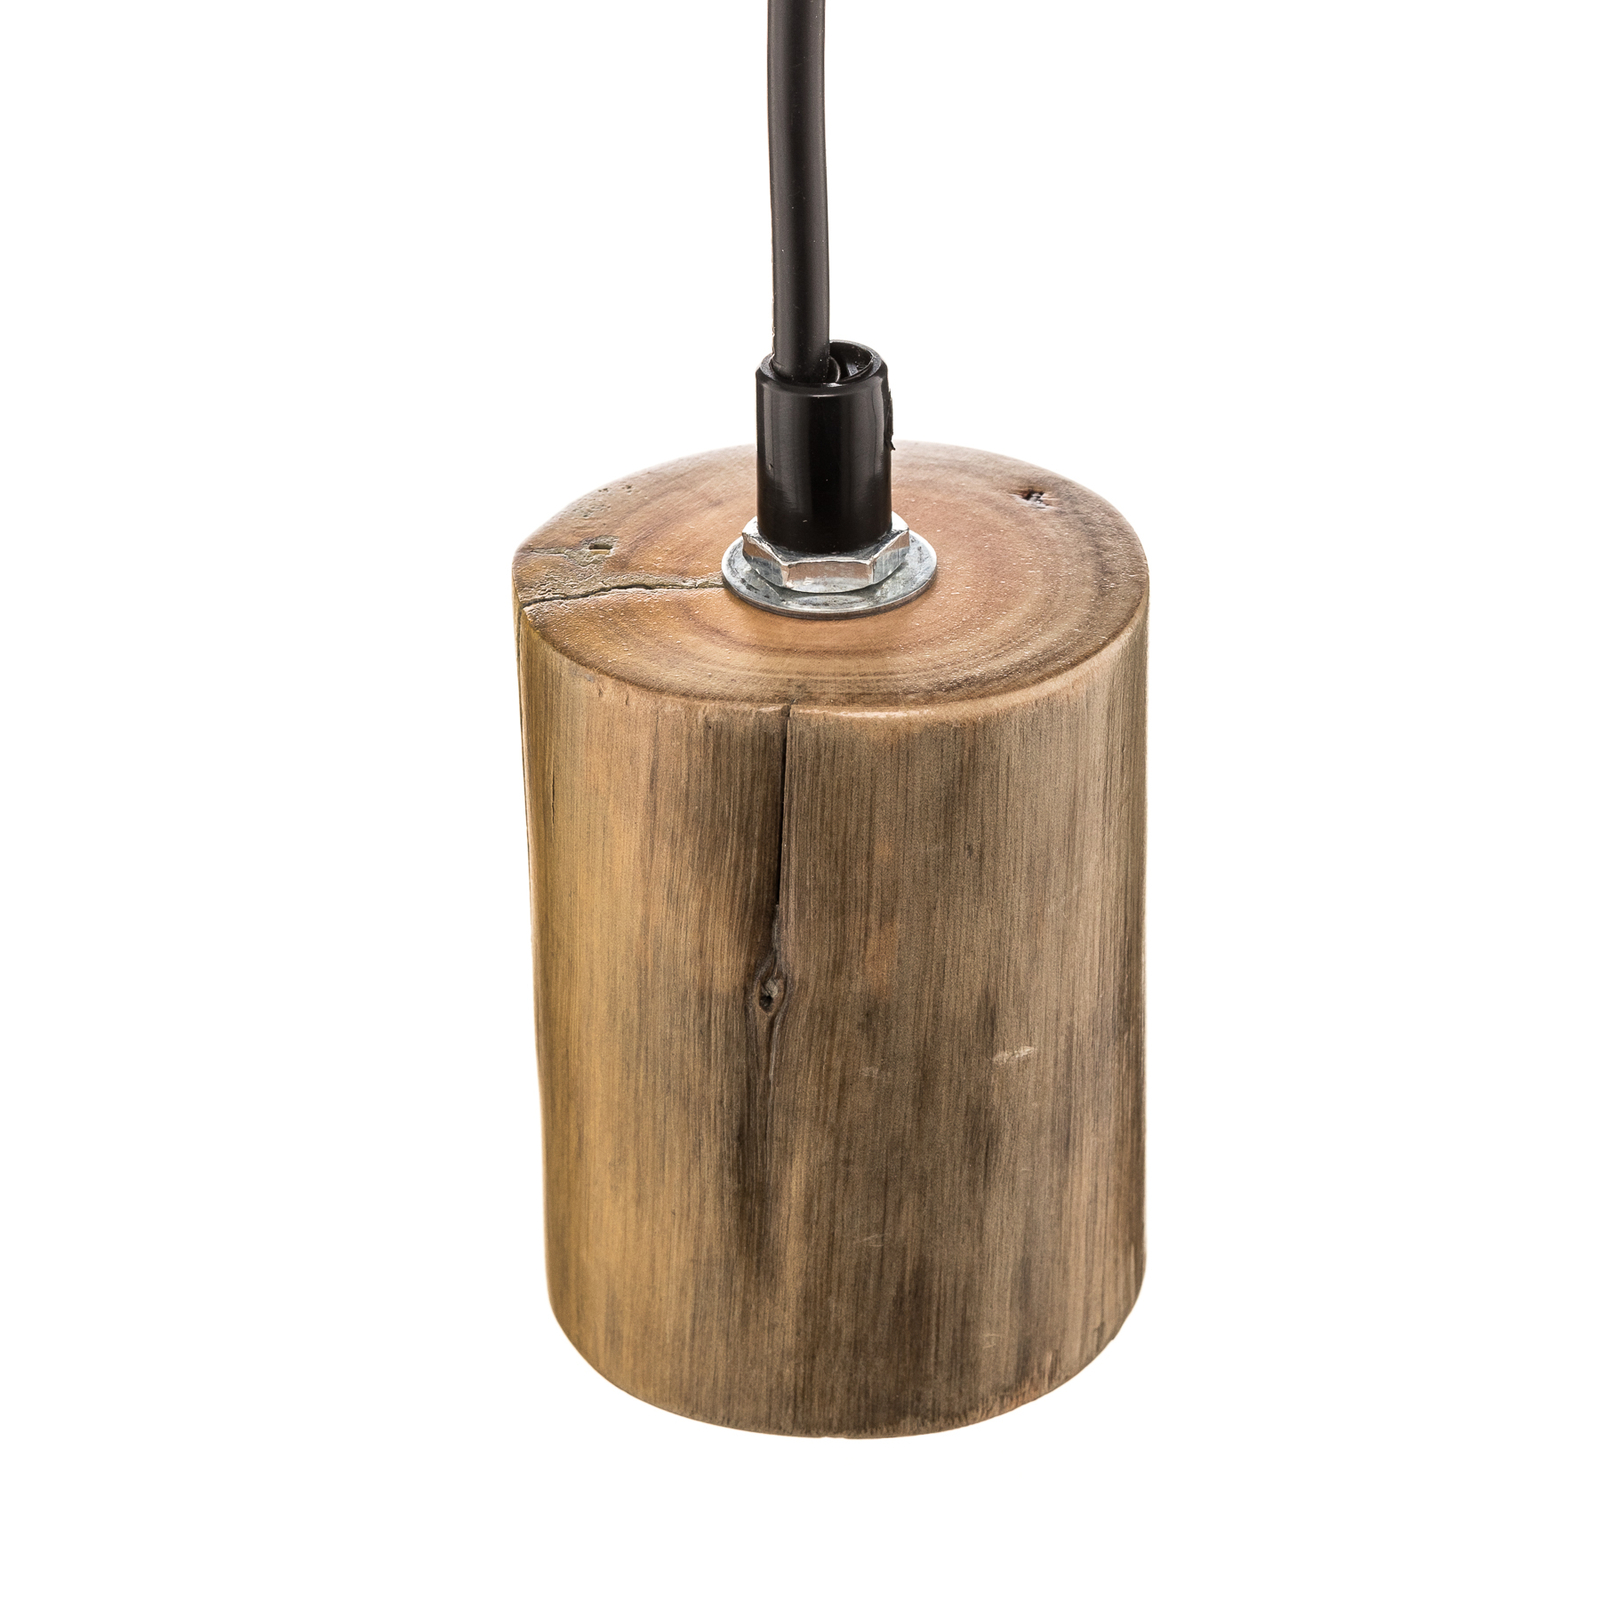 Candeeiro suspenso Tronco, luz única, pendente de madeira 8 cm